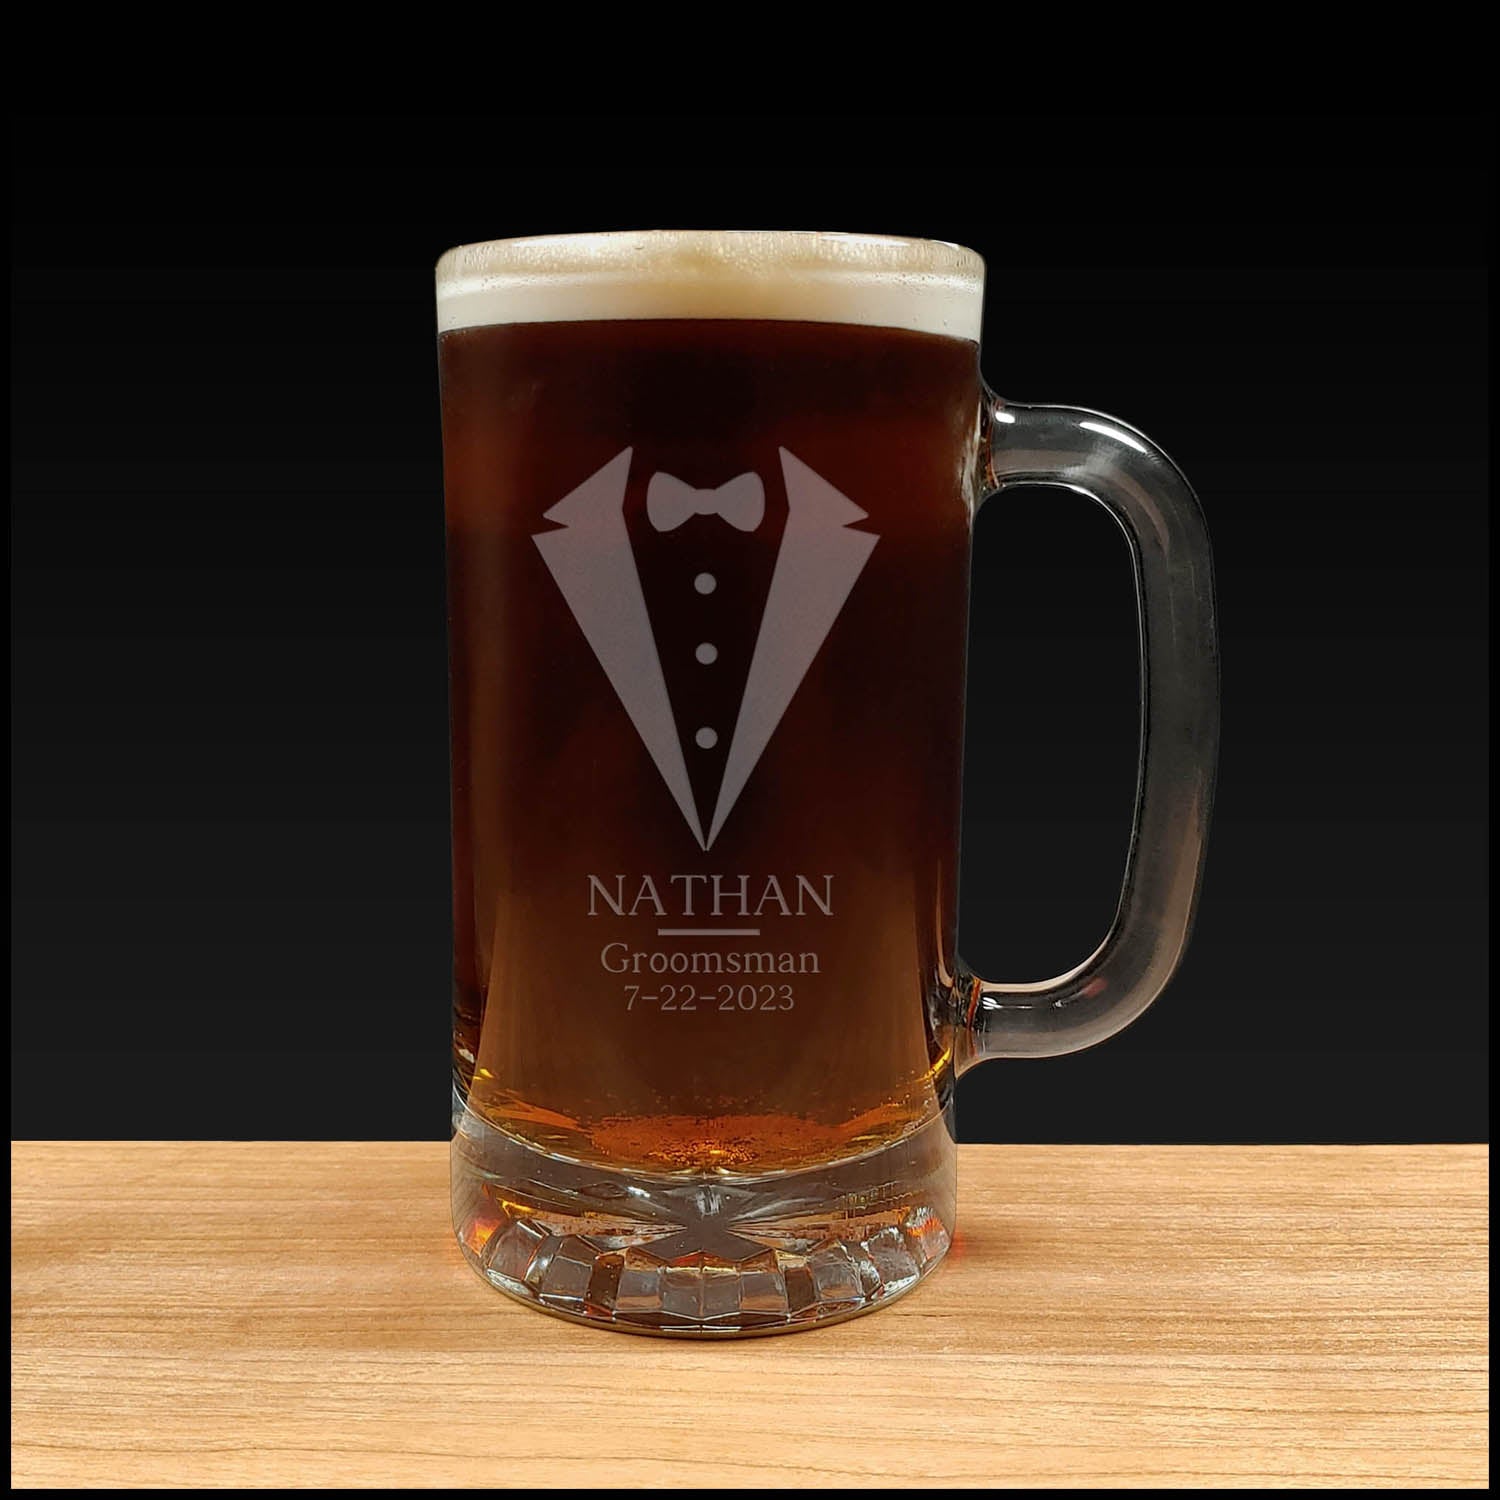 Groomsman Aardvark Beer Mug with Tuxedo design - Dark Beer - Copyright Hues in Glass